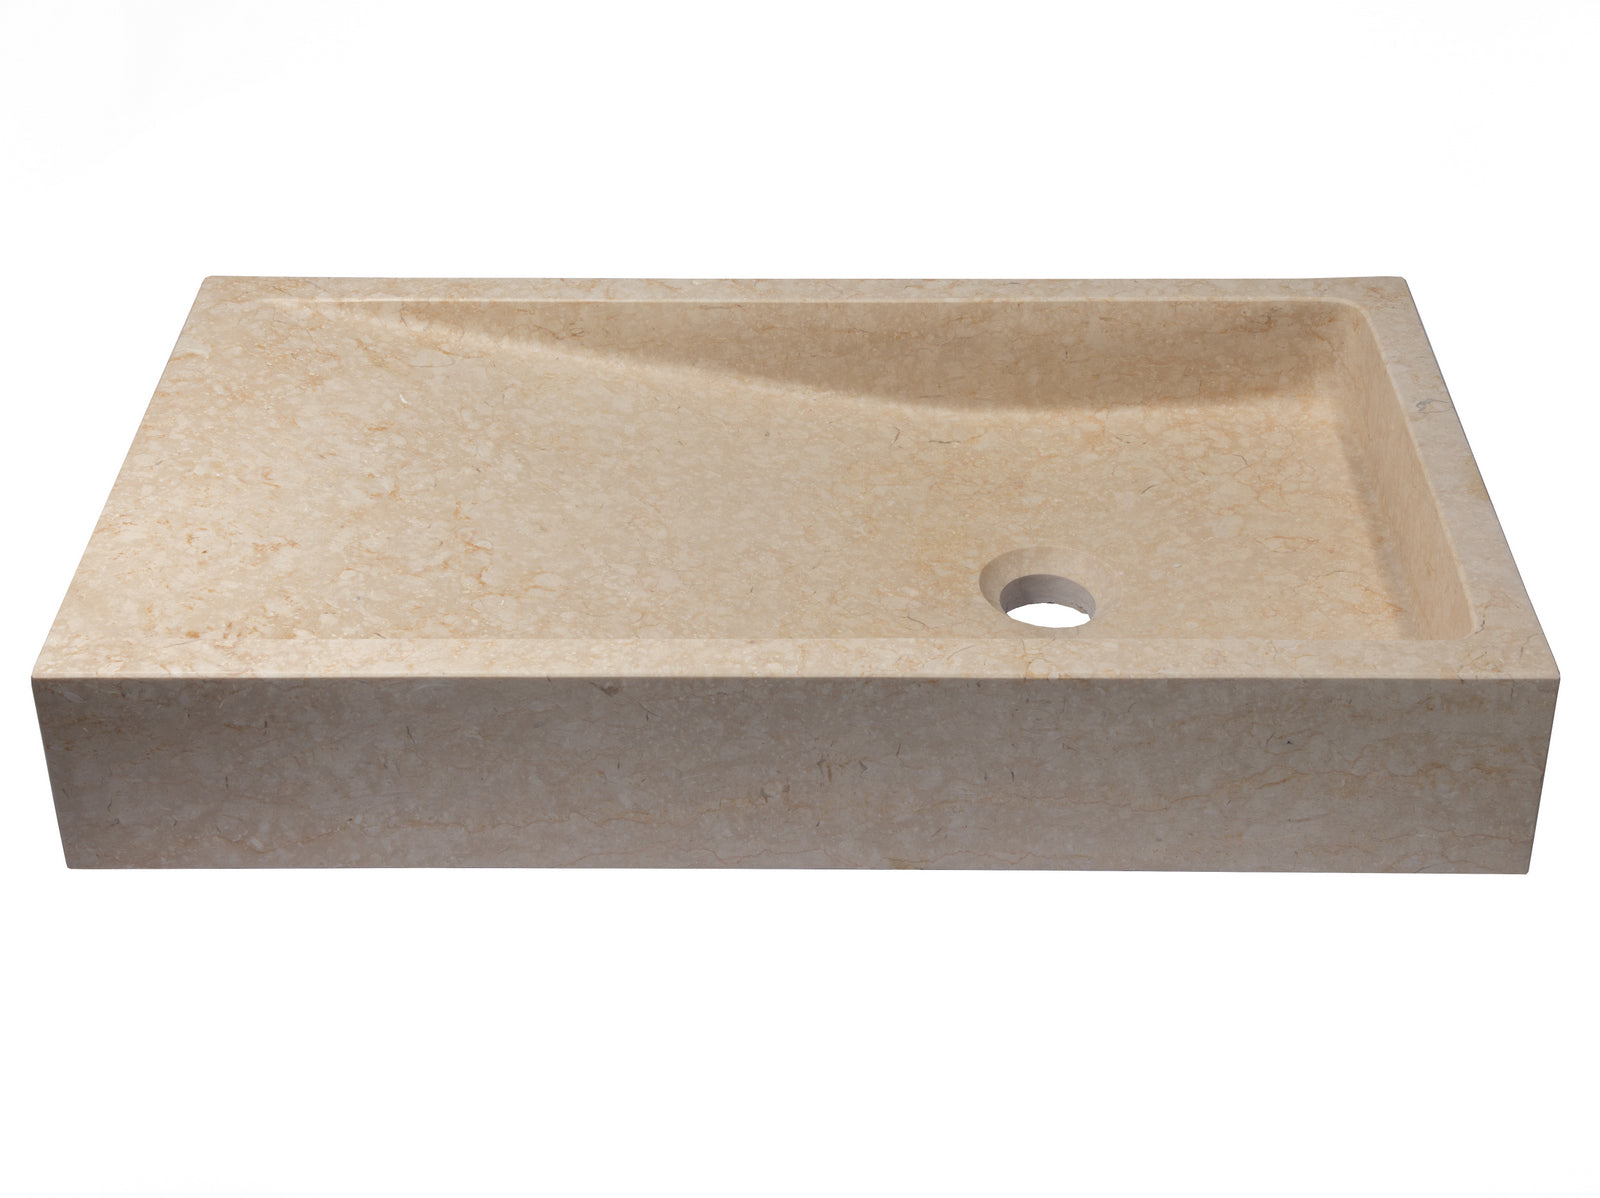 Rectangular Slopes Vessel Sink in Honed Galala Beige Marble